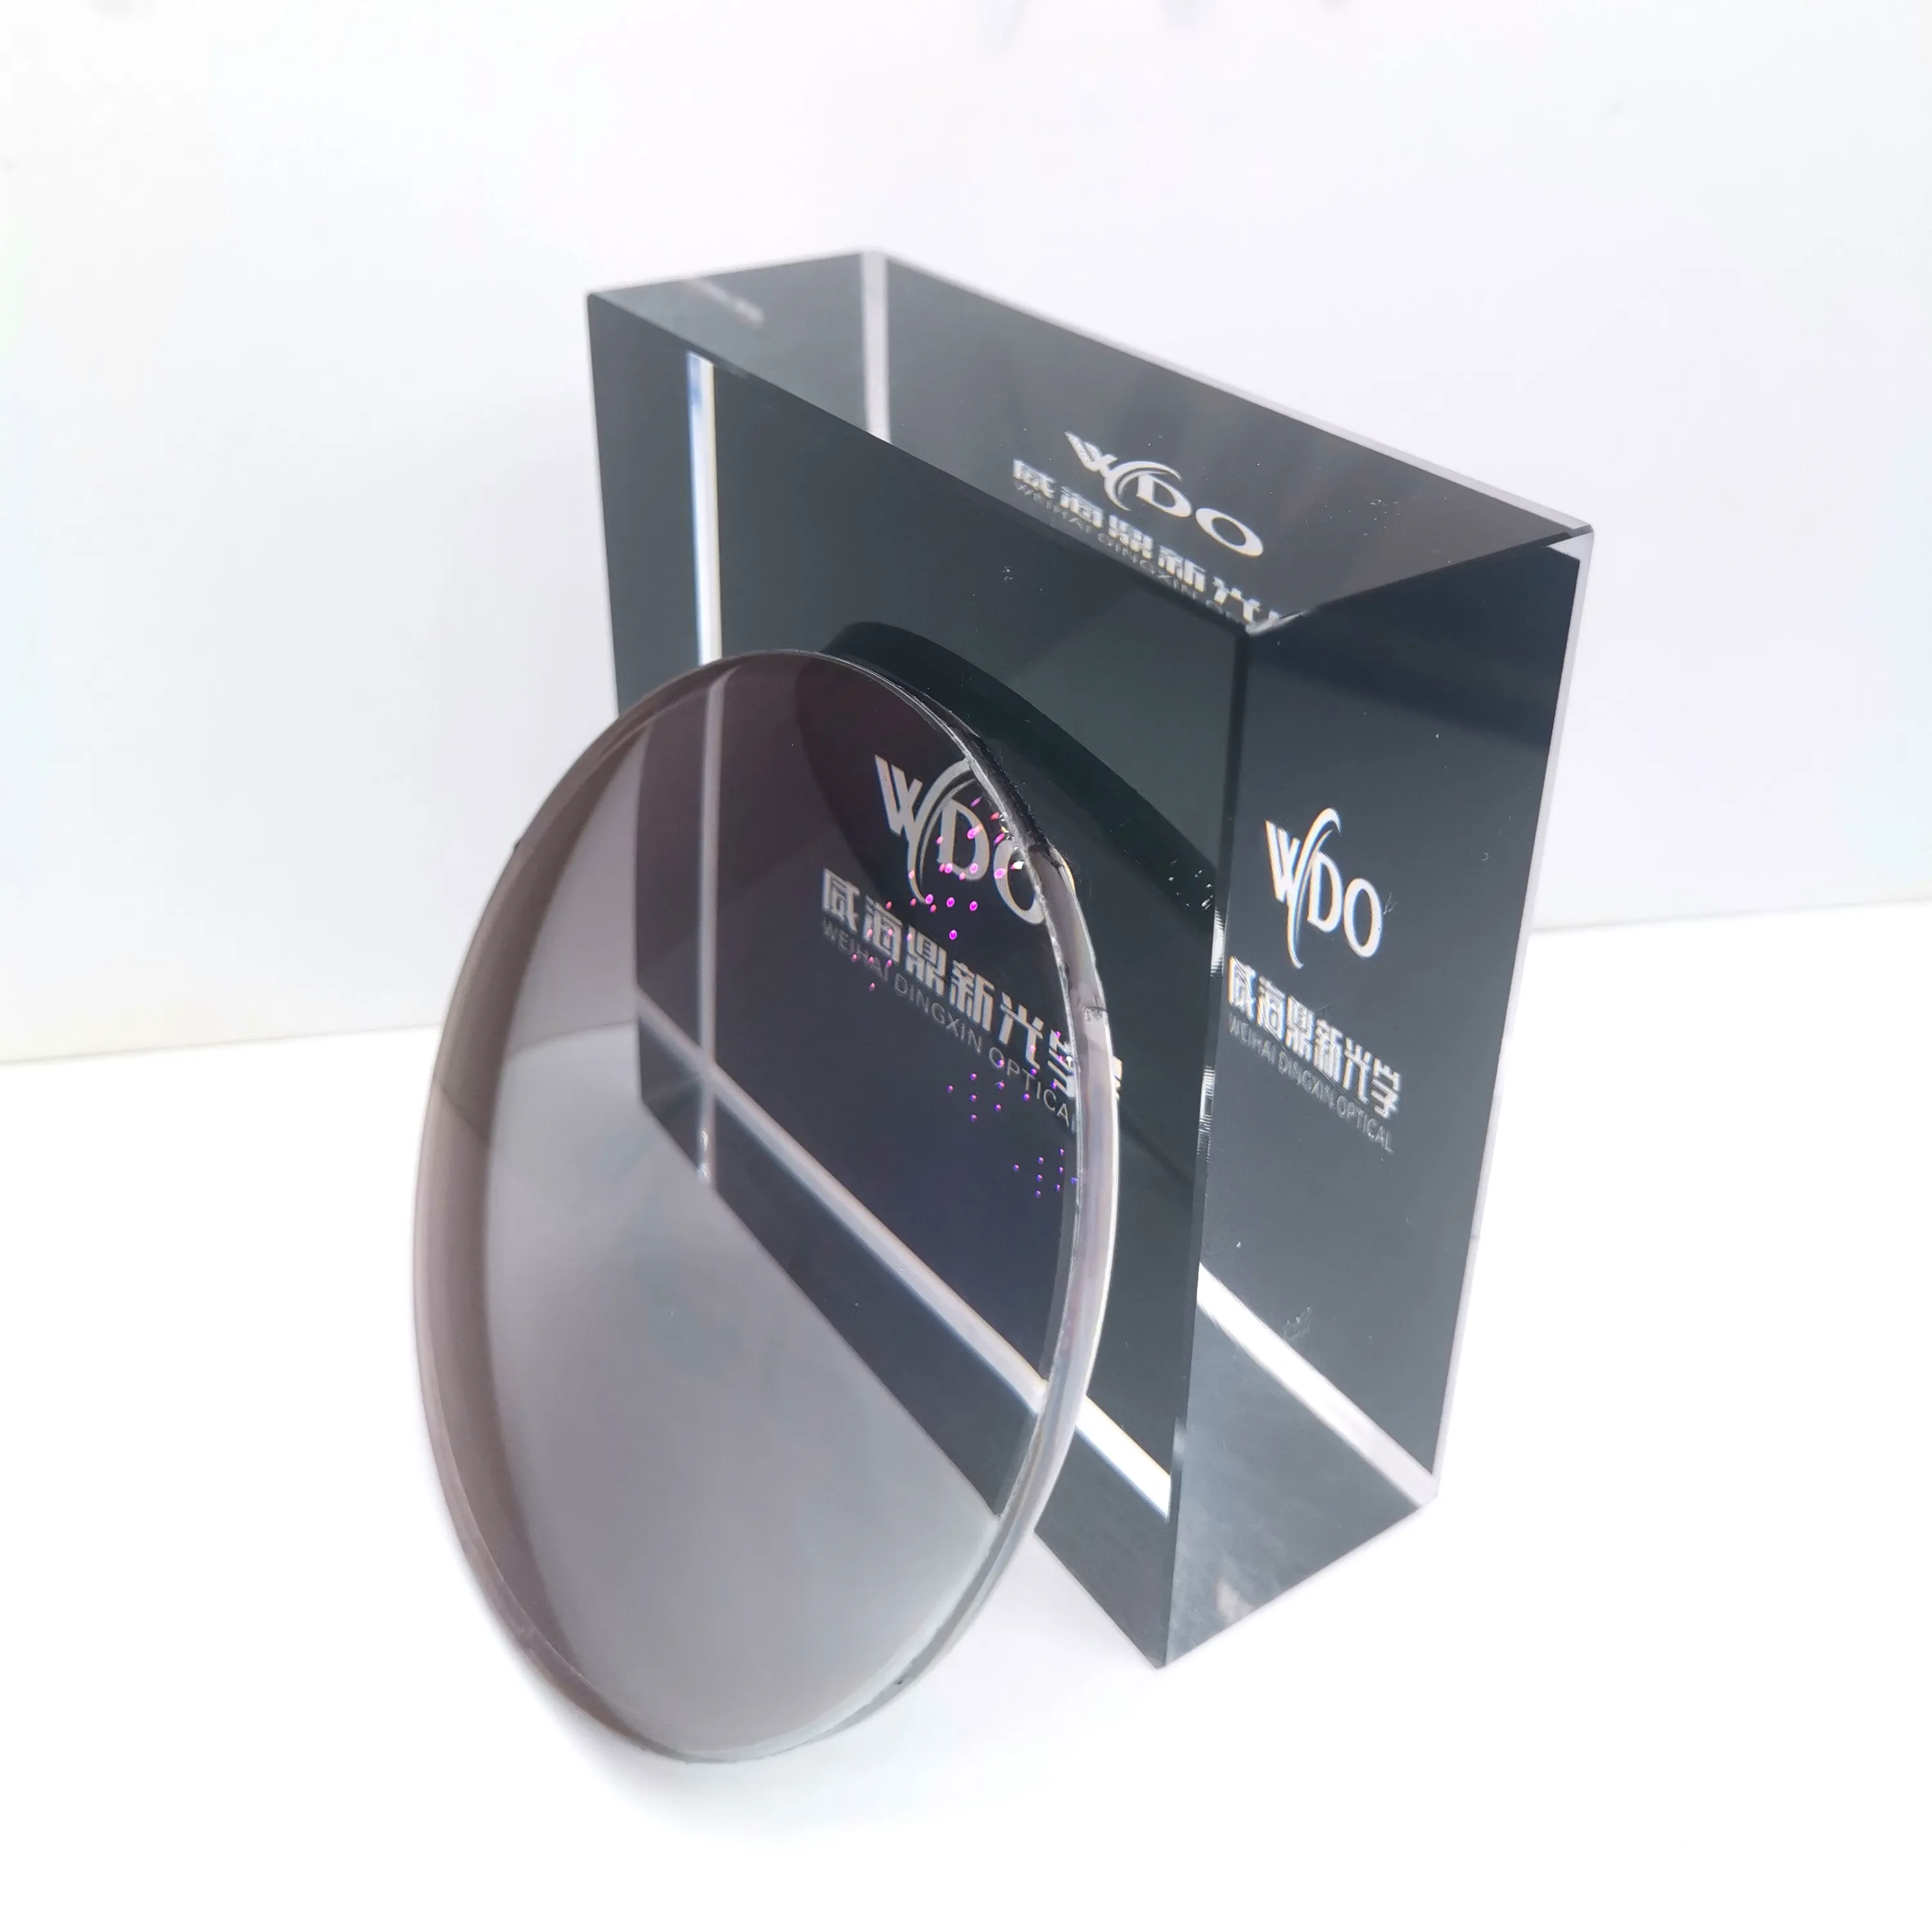 WDO 1.59 PC lens single vision Photochromic SHMC lens photochromic glass price lenses for glasses kacamata photocromic